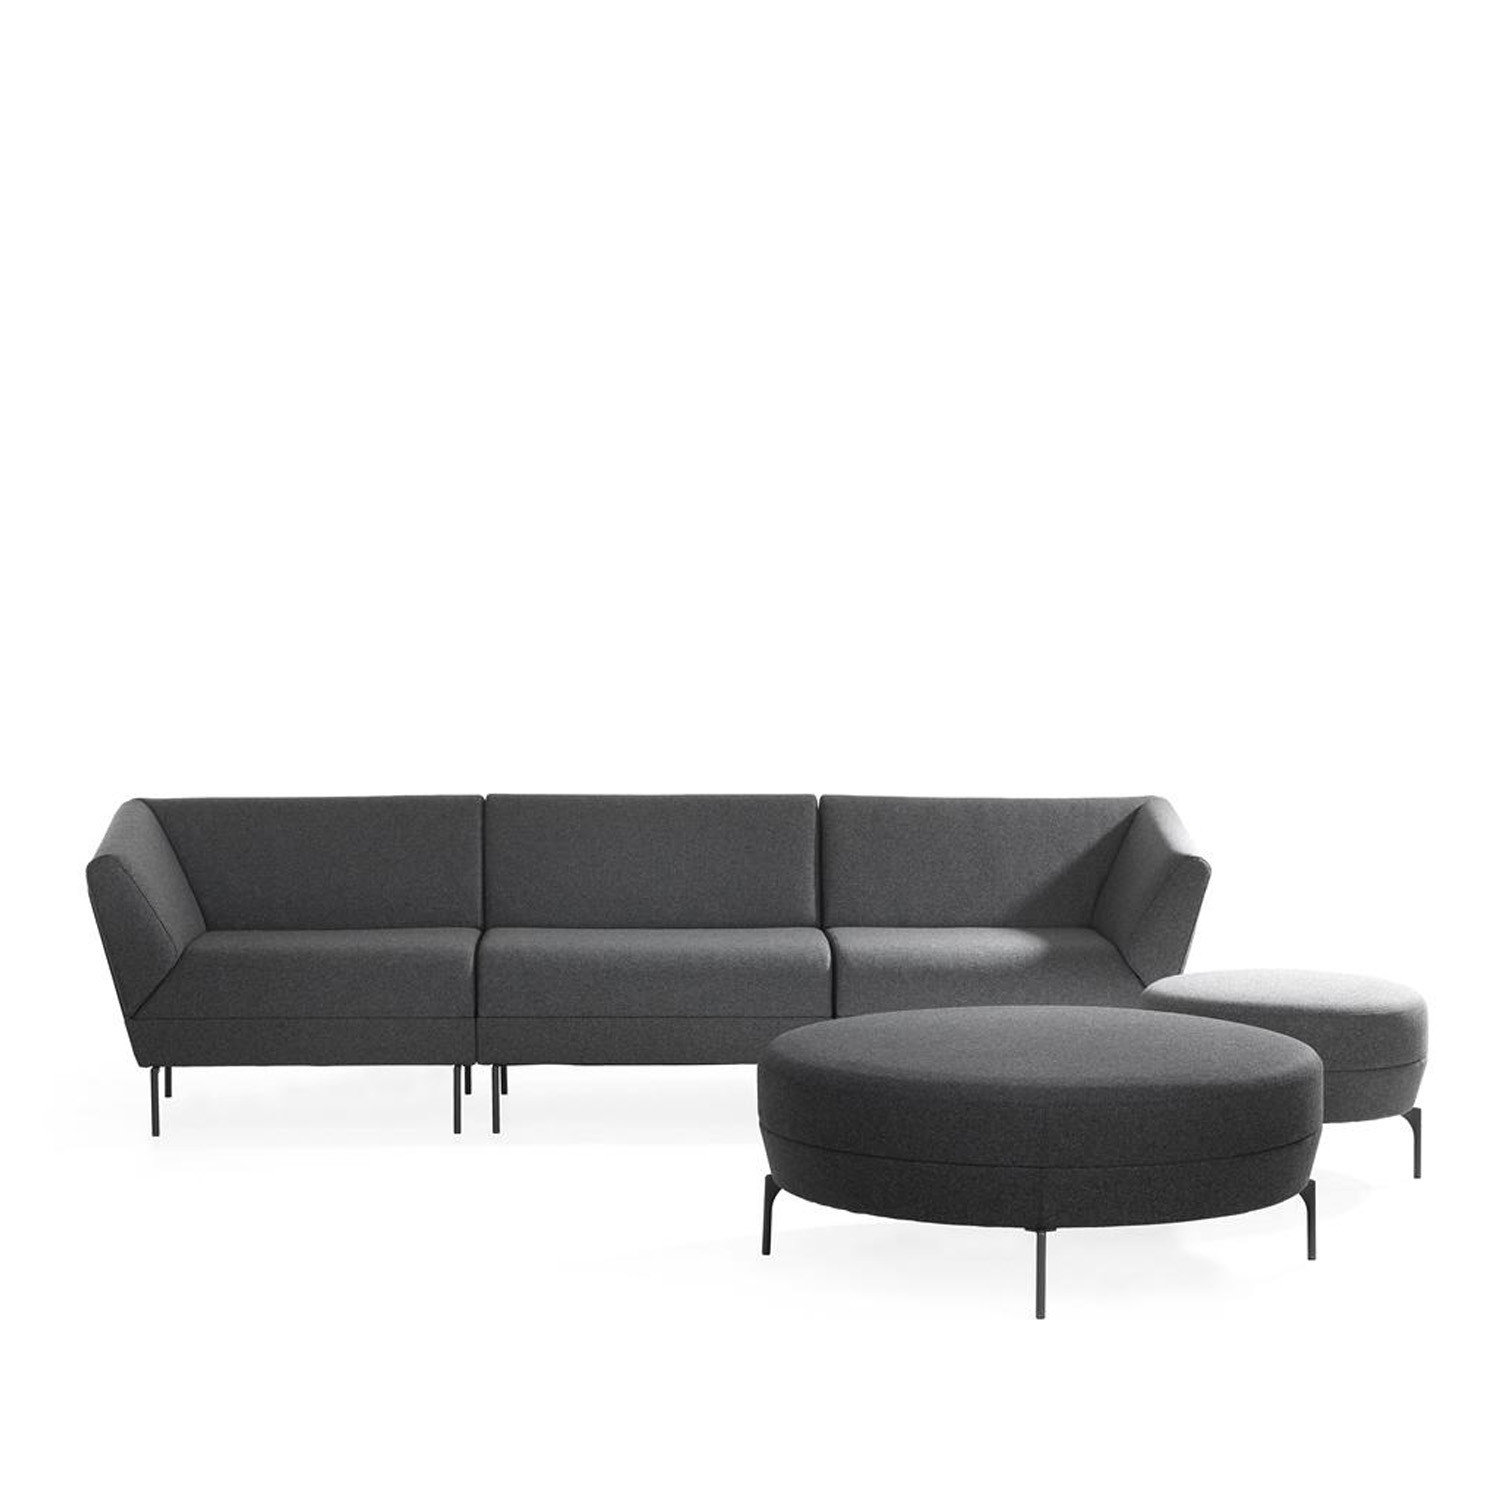 Addit Modular Sofa